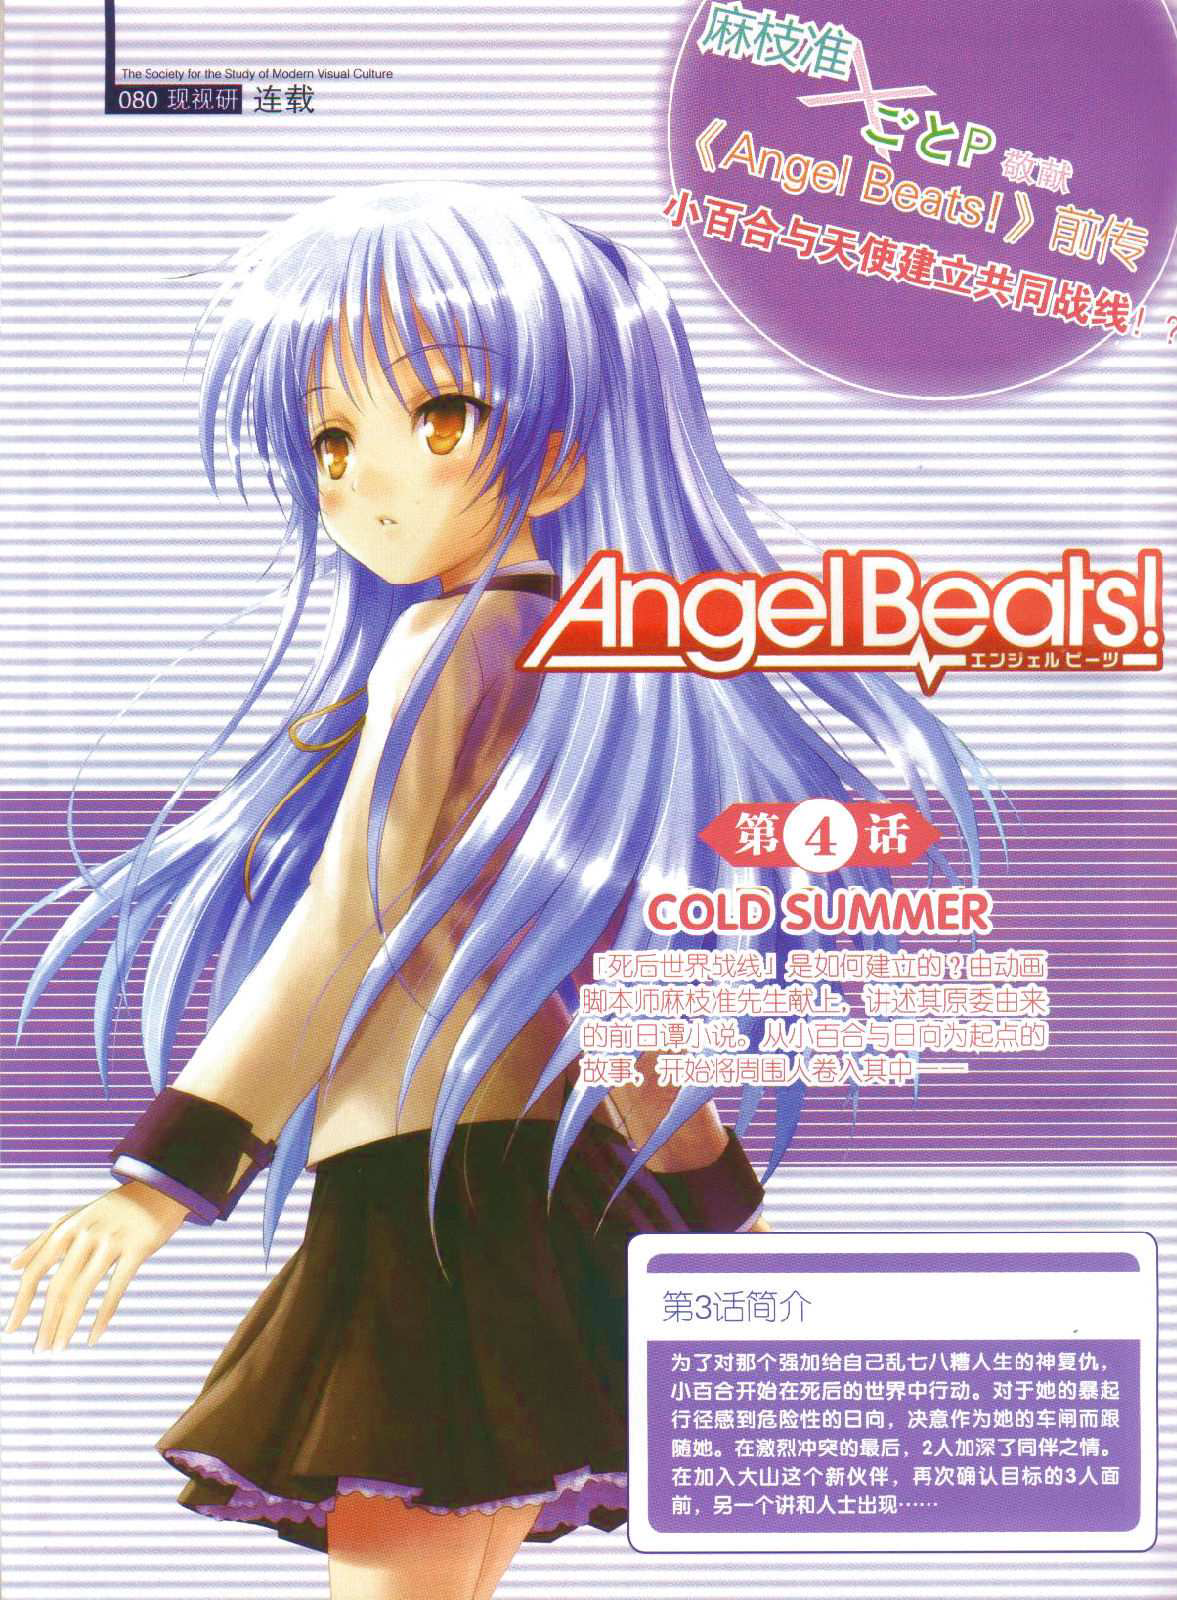 Angel Beats Track Zero Wiki Key Fandom